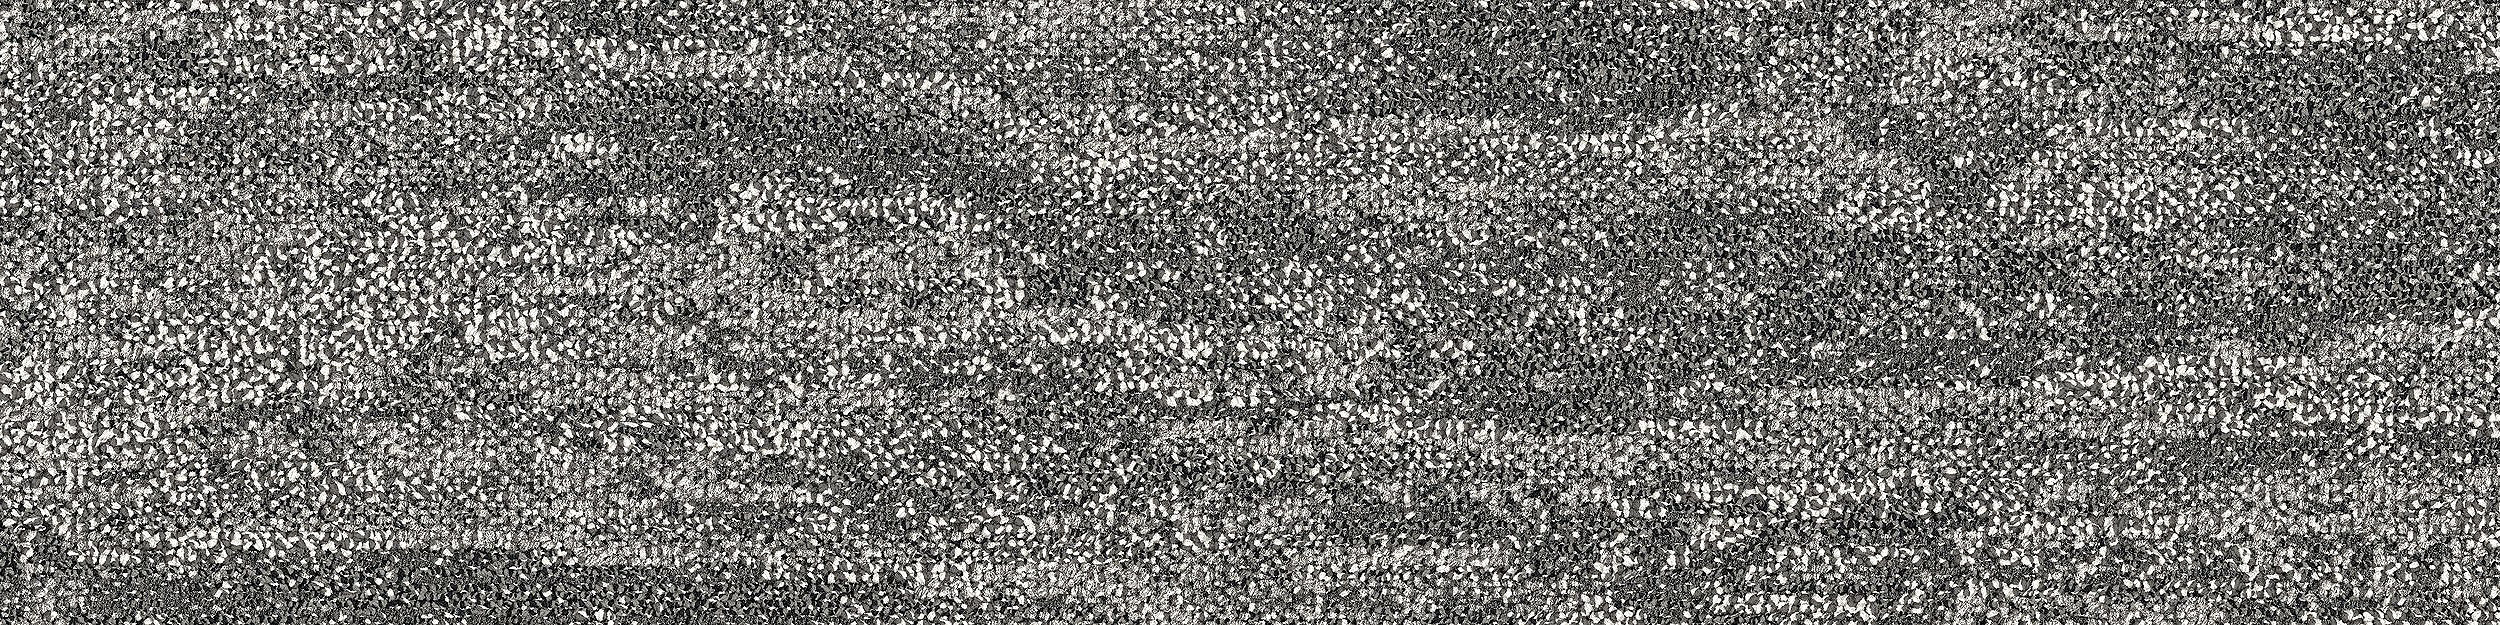 Rock Springs Carpet Tile In Nickel Gneiss numéro d’image 4